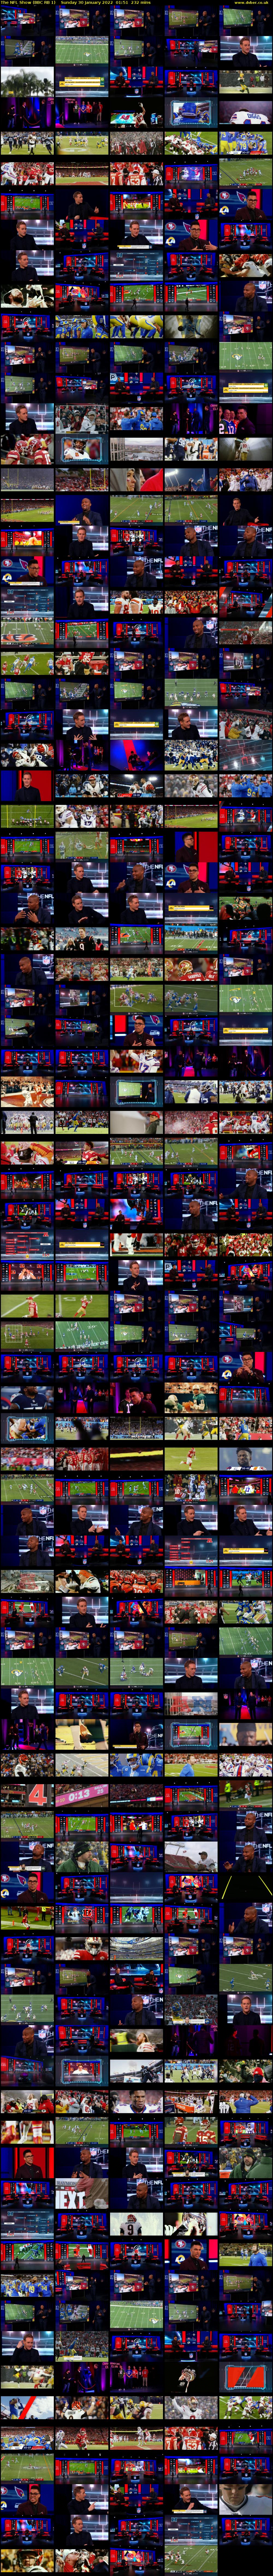 The NFL Show (BBC RB 1) Sunday 30 January 2022 01:51 - 05:43